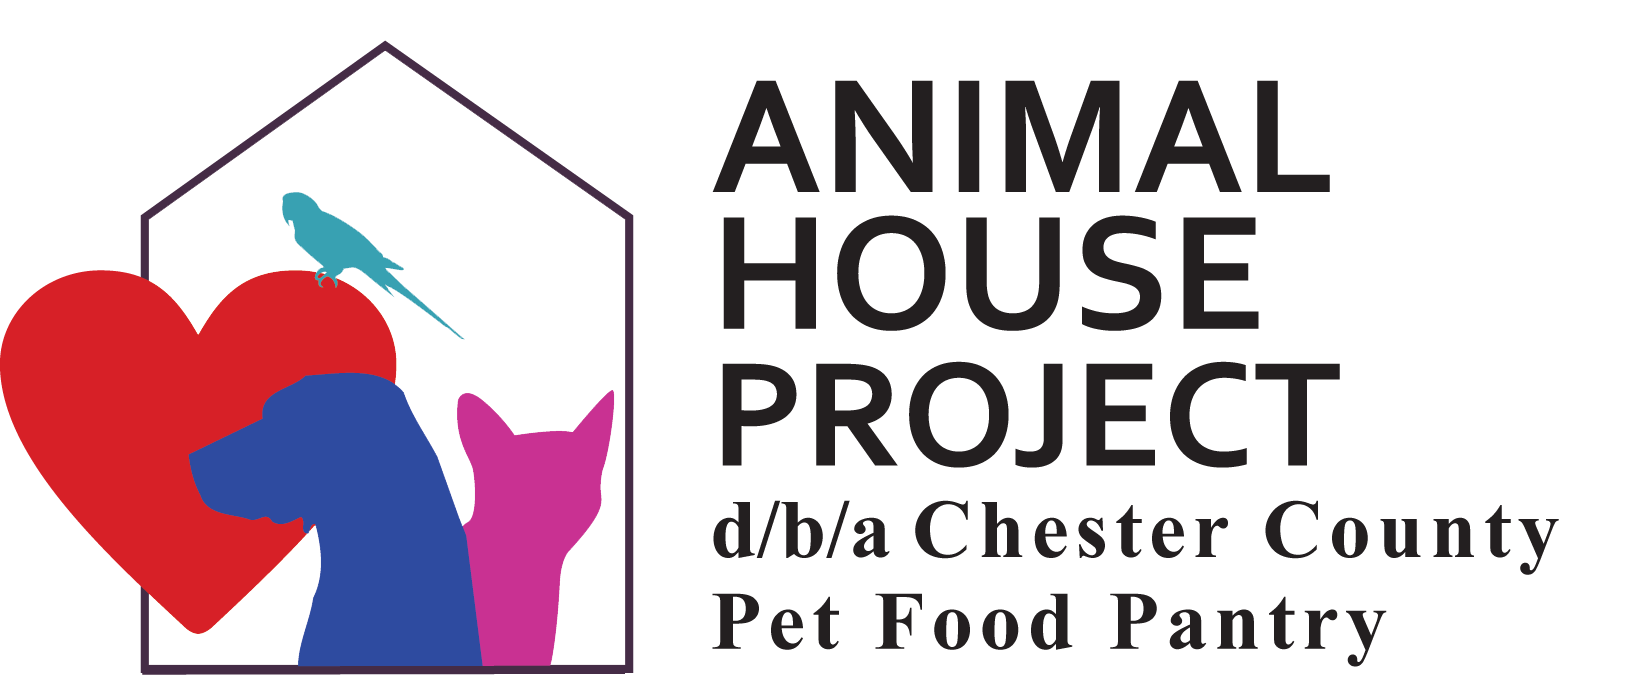 Animal House Project Logo